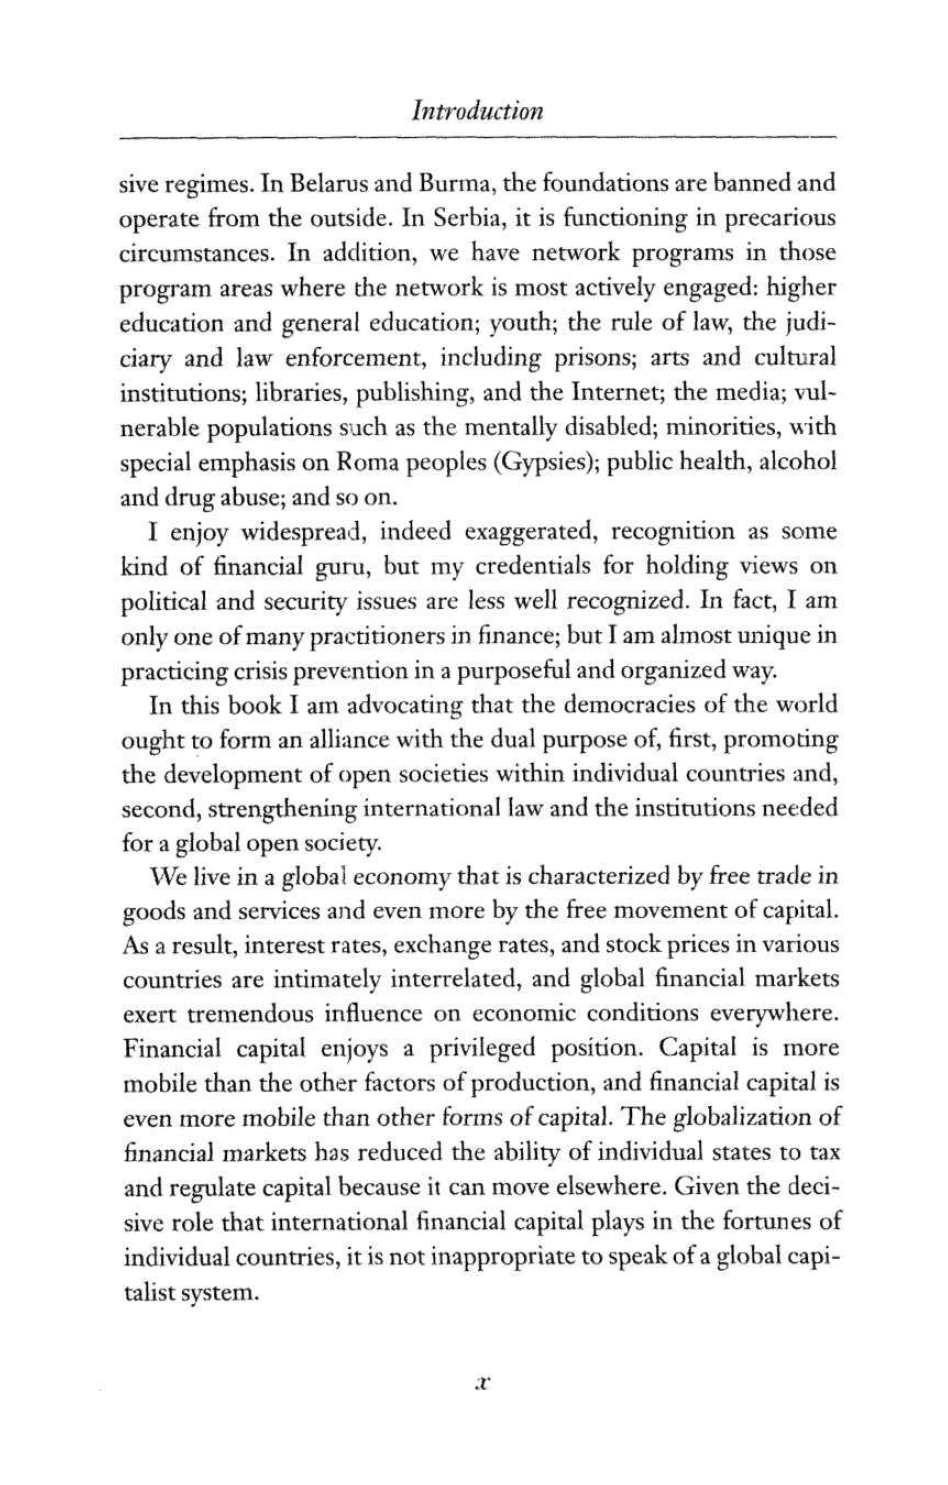 George Soros' book 'Open Society Reforming Global Capitalism' (November 7, 2000)